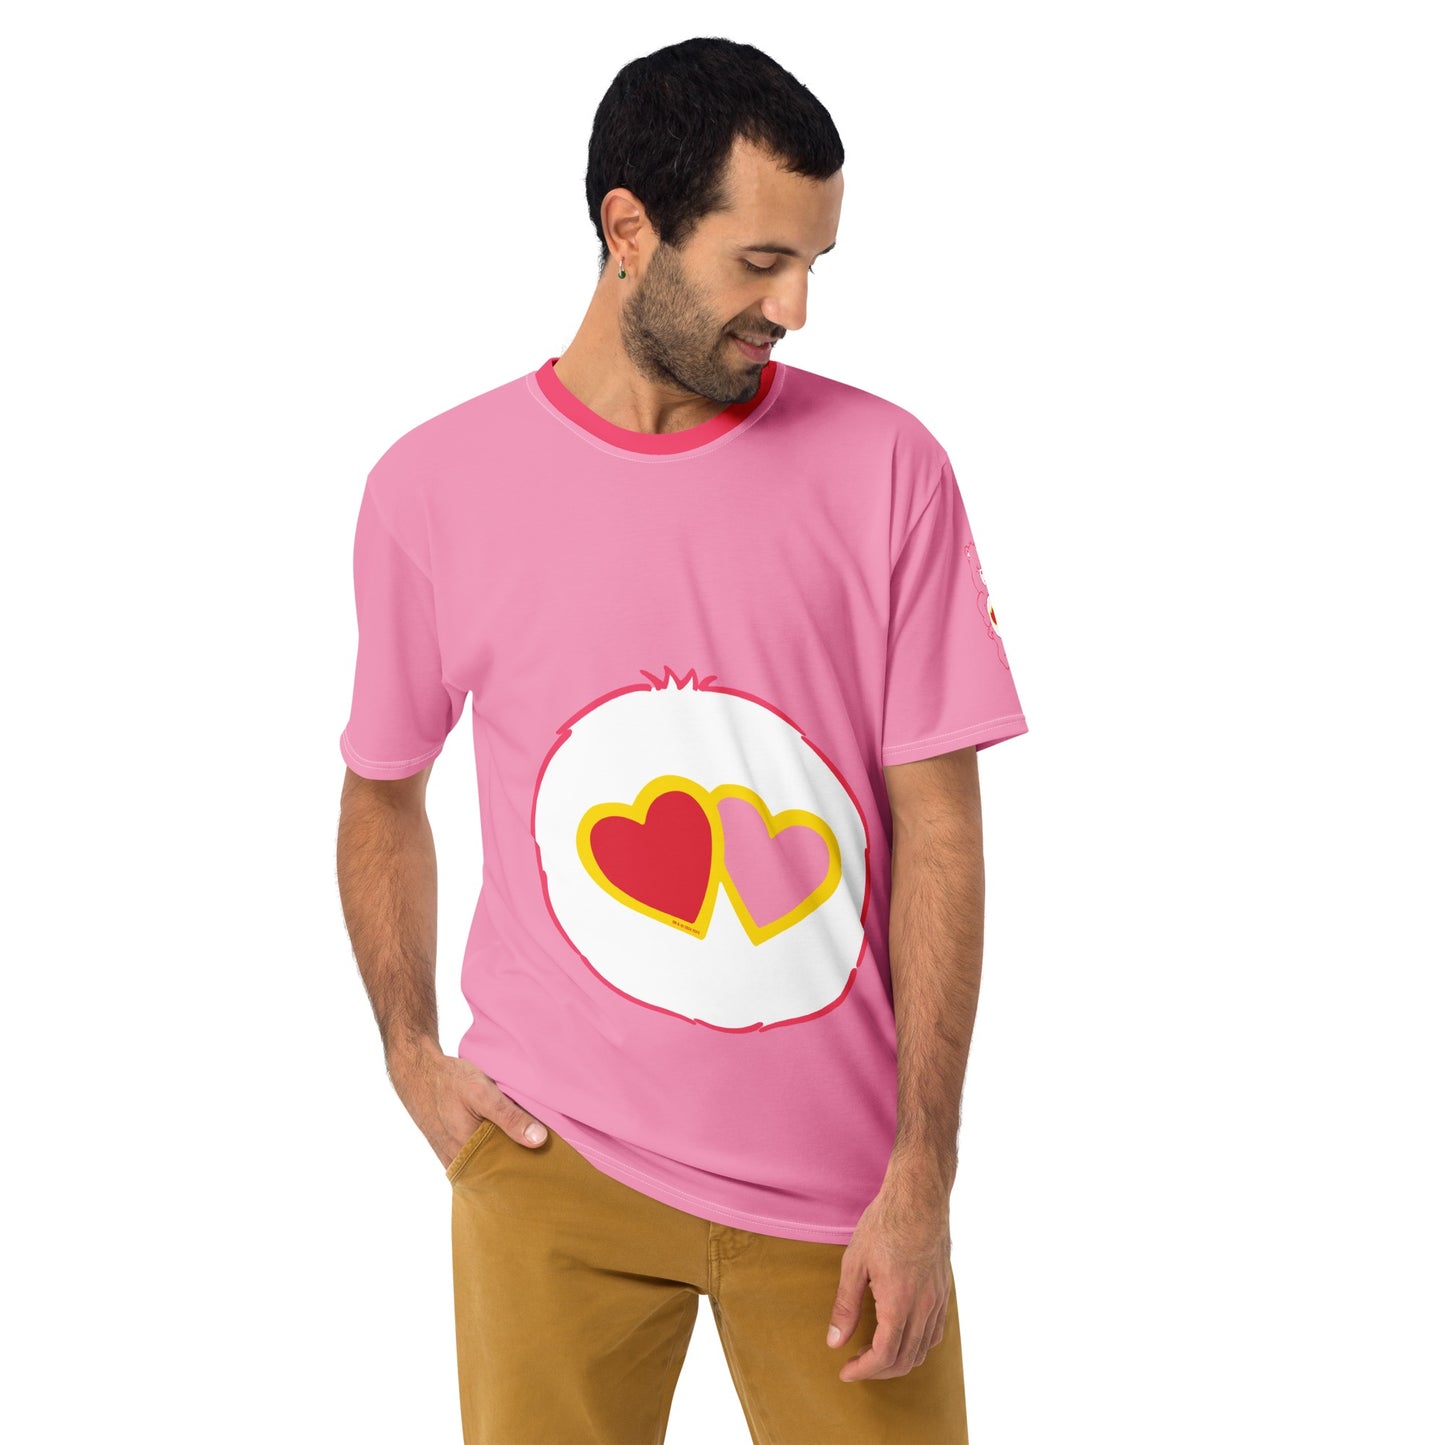 Care Bears Love-A-Lot Bear™ Belly Badge Adult T-Shirt